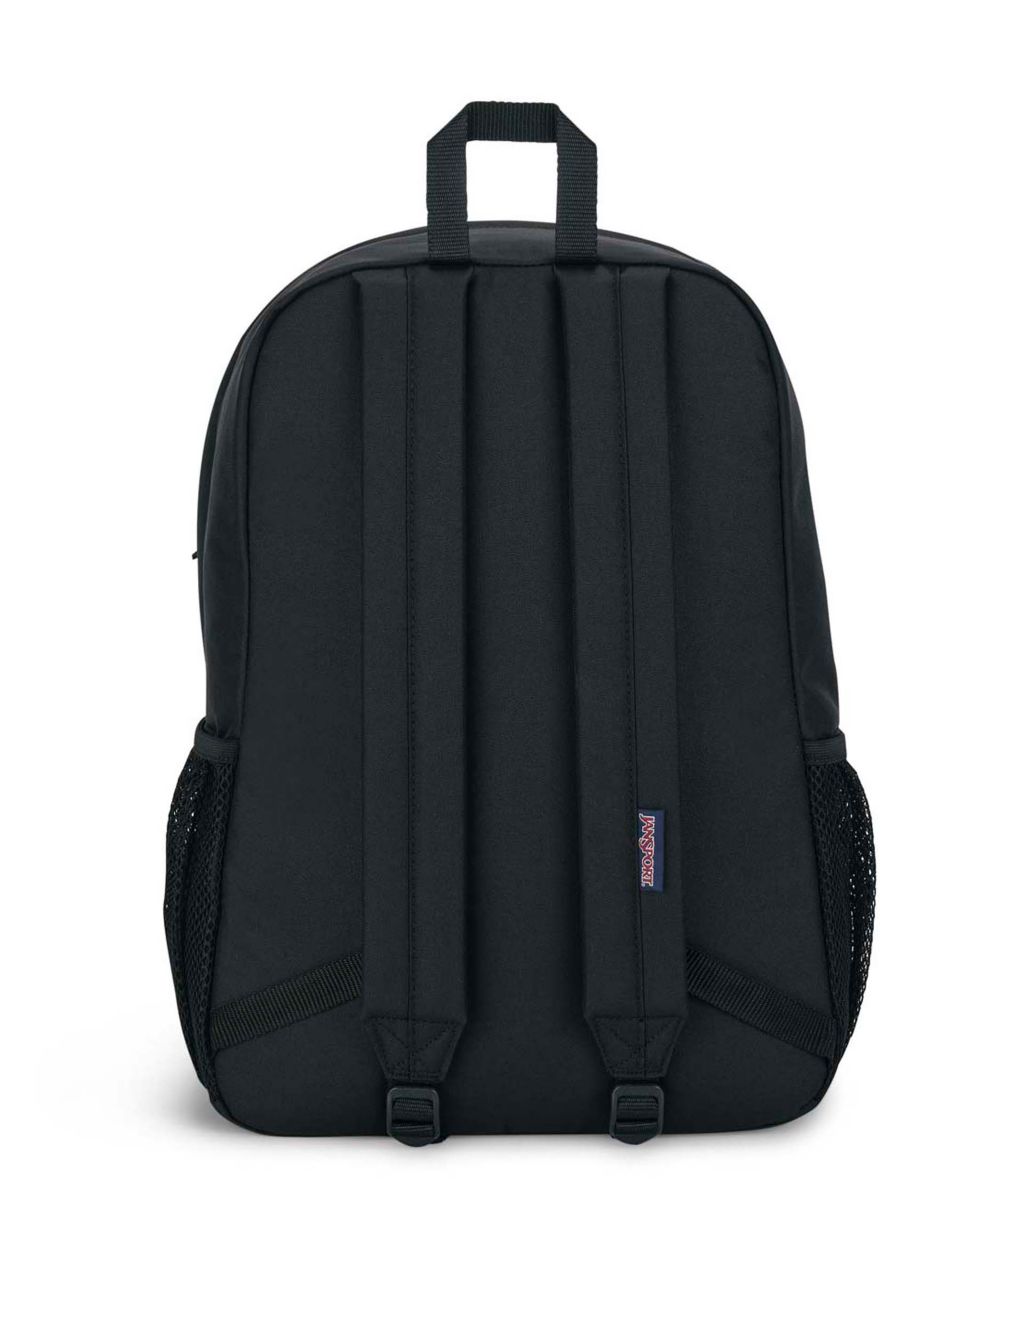 Doubleton Multi Pocket Backpack image 7